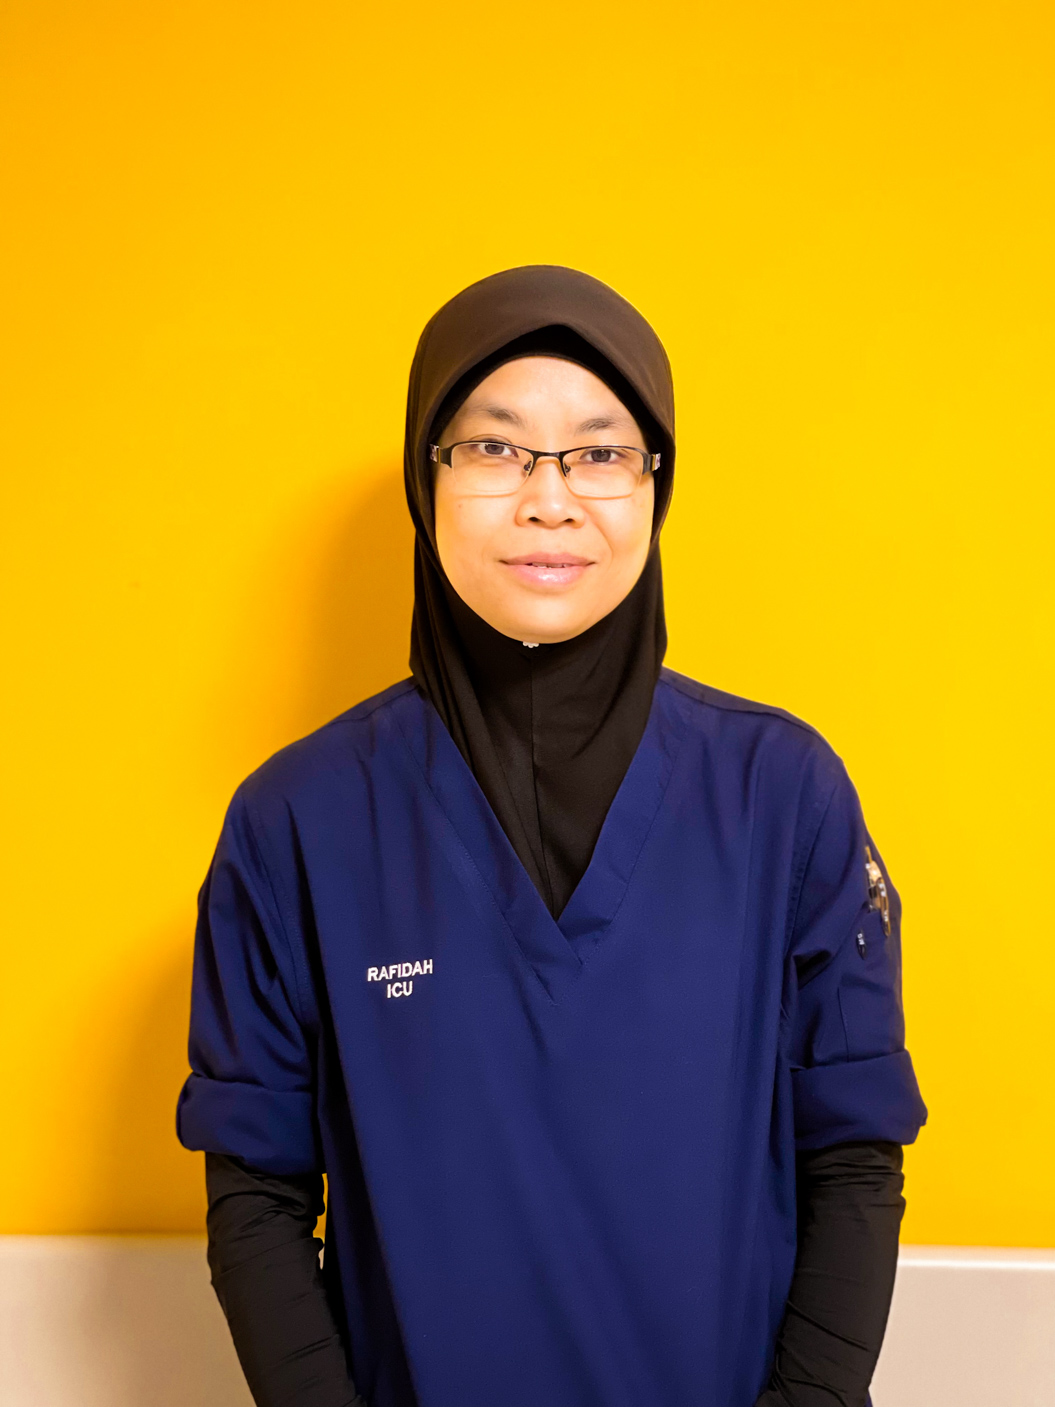 Prof Rafidah